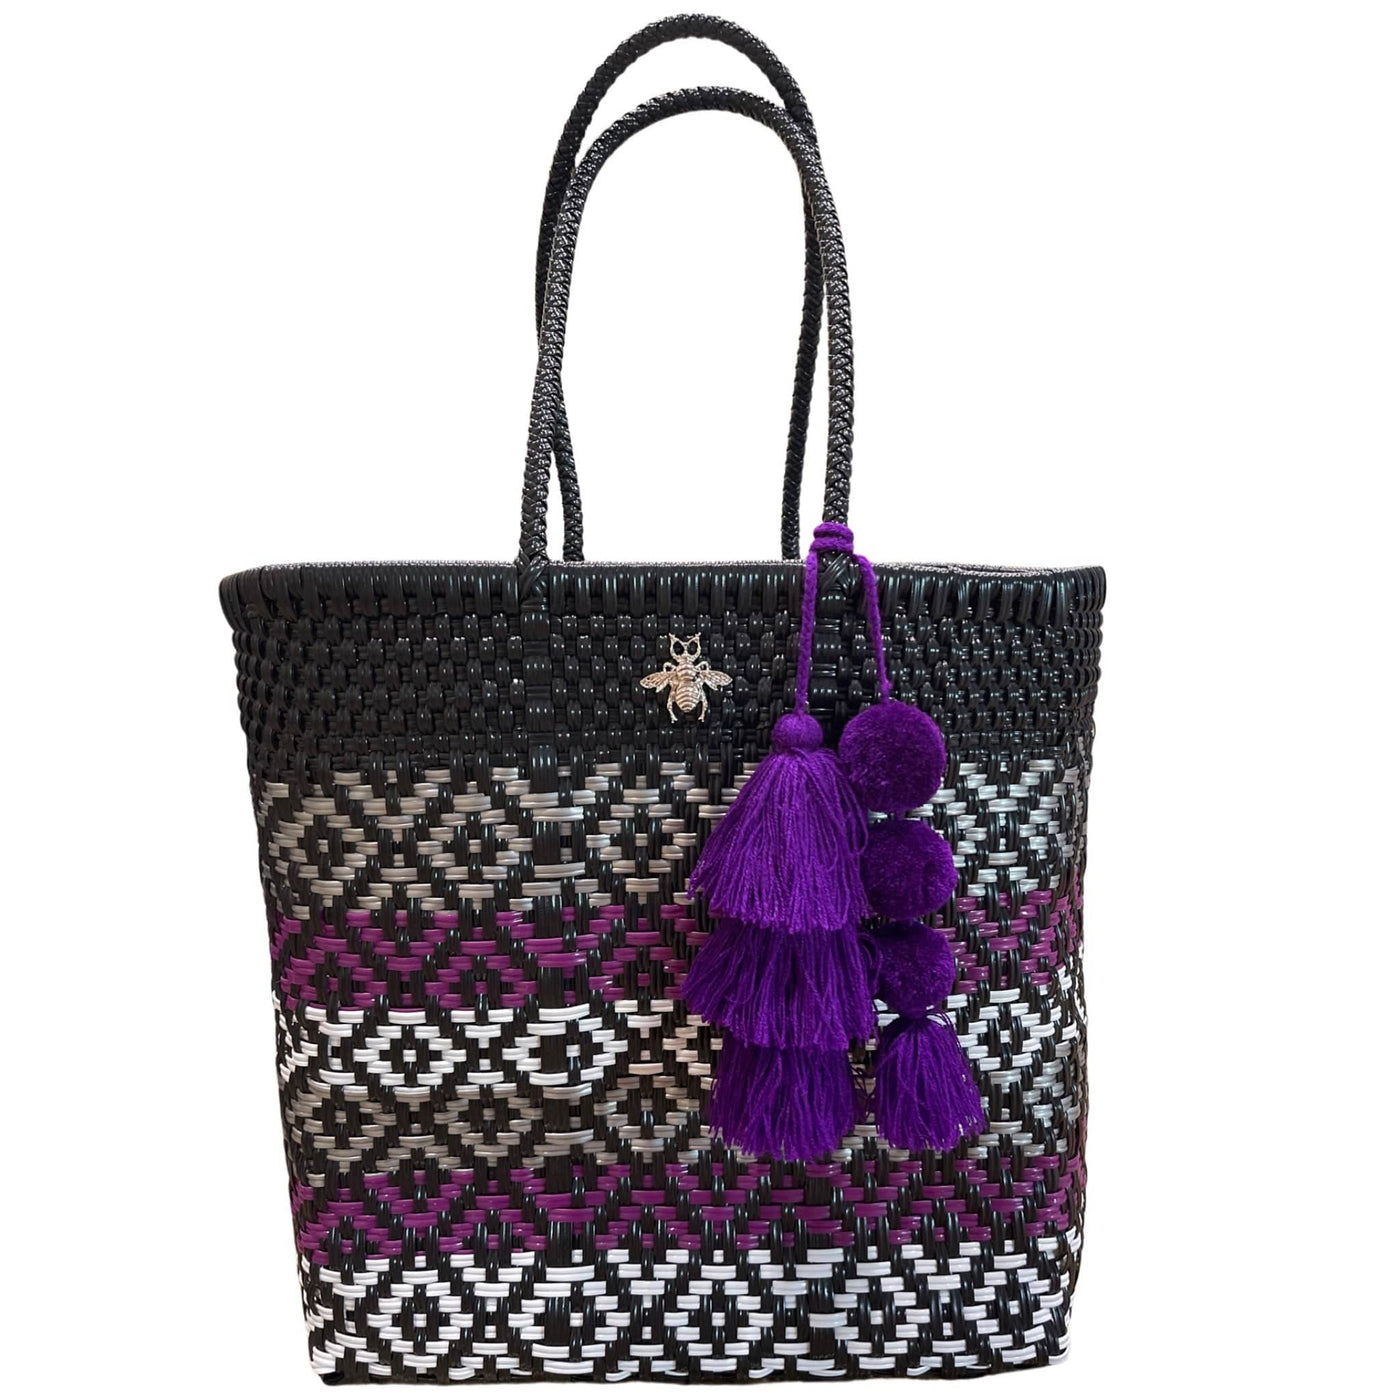 BeeLoved Custom Artisan Bags and Gifts Handbags Medium Purple Haze Beech Bag